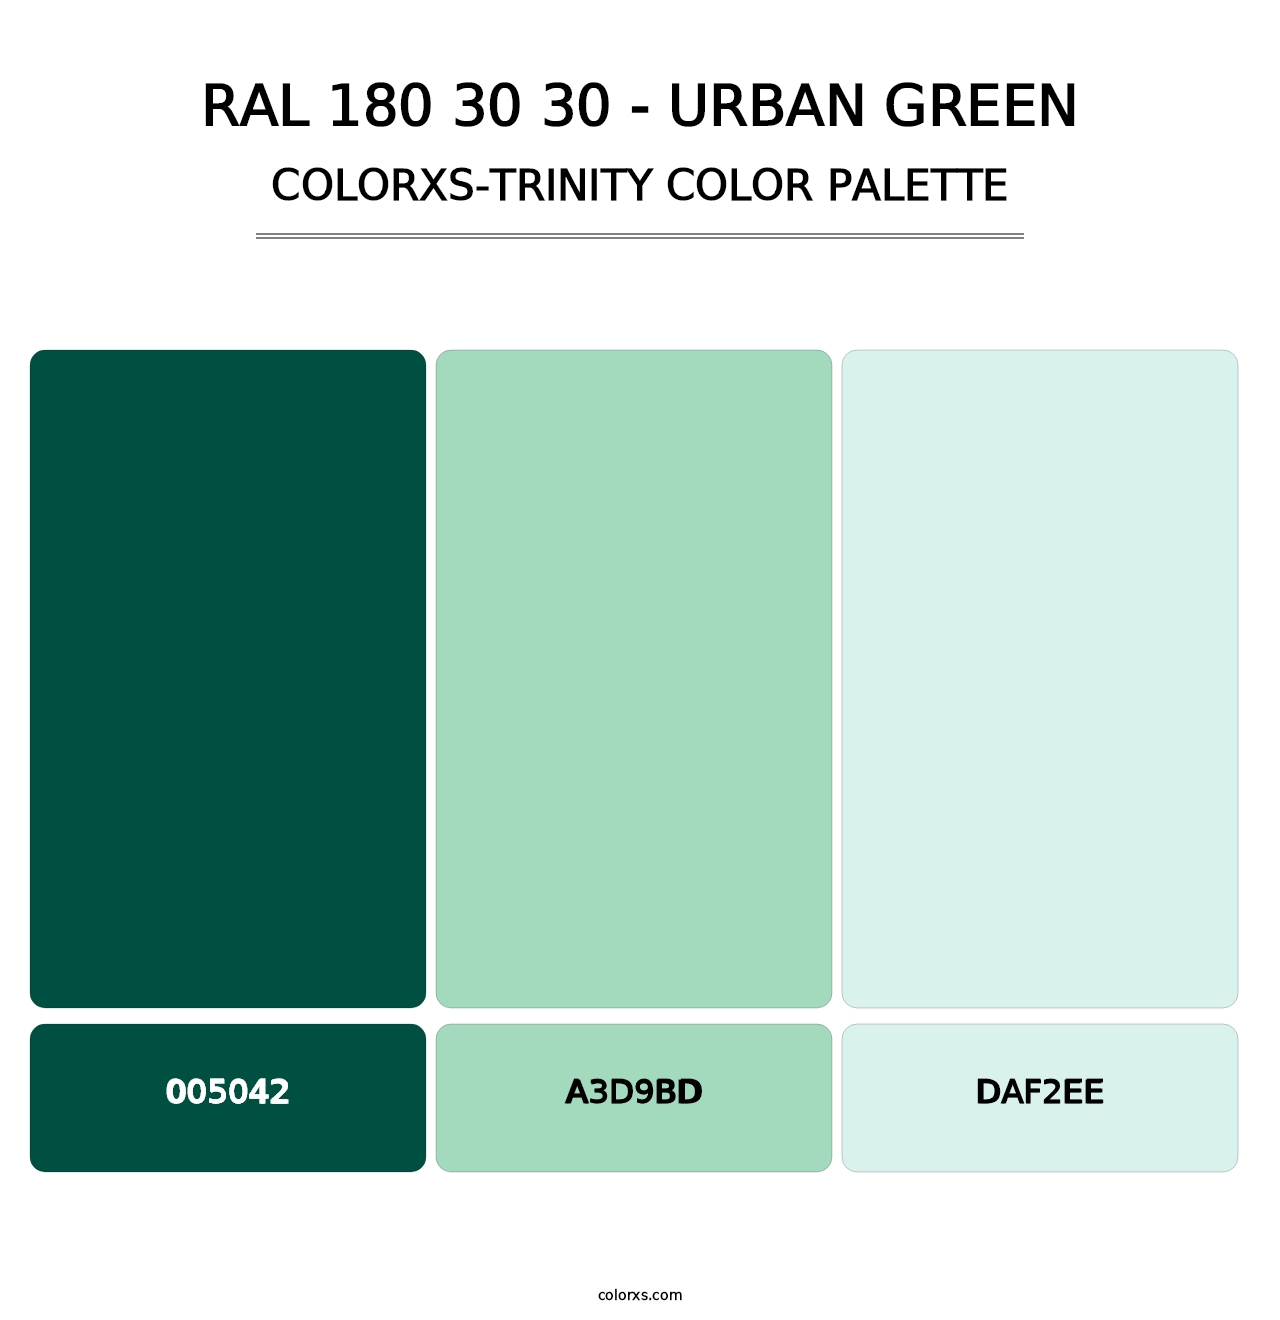 RAL 180 30 30 - Urban Green - Colorxs Trinity Palette